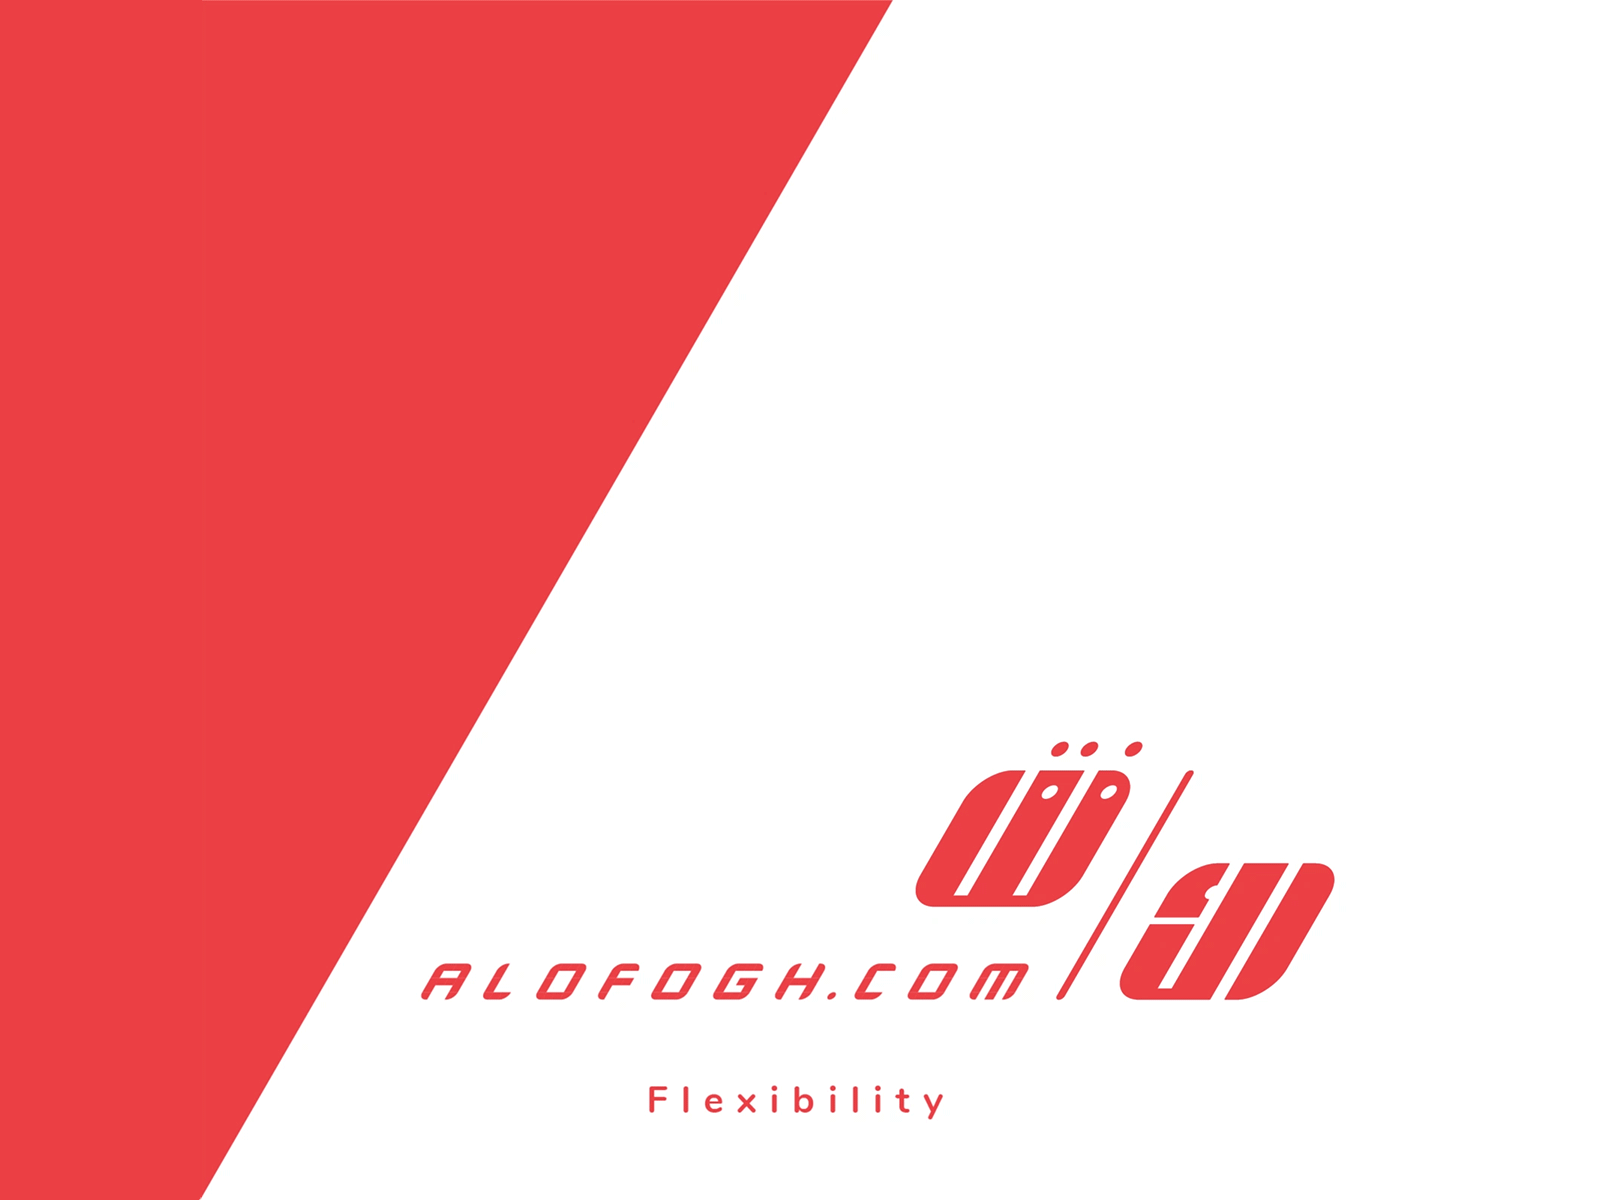 AlOfogh Flexibility